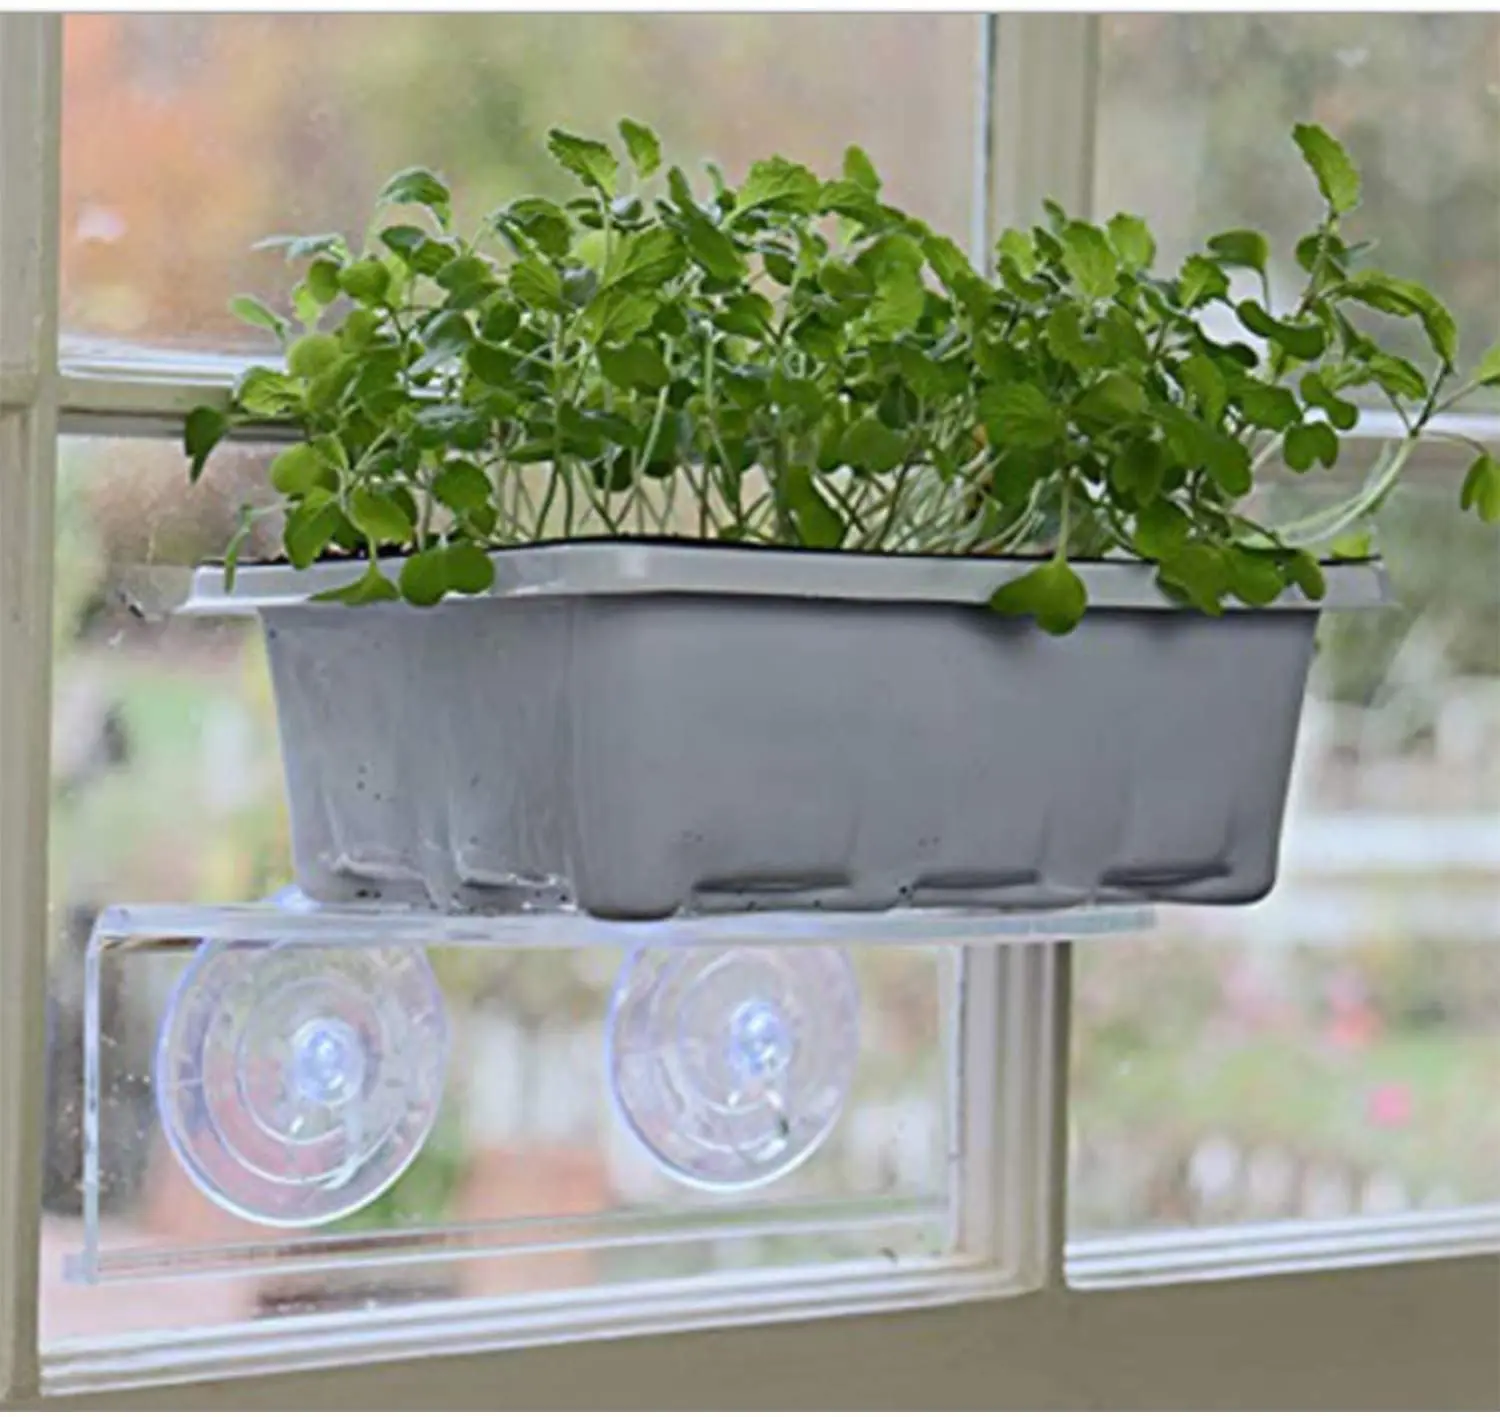 Window Garden + Double Veg Ledge Suction Cup Window Shelf